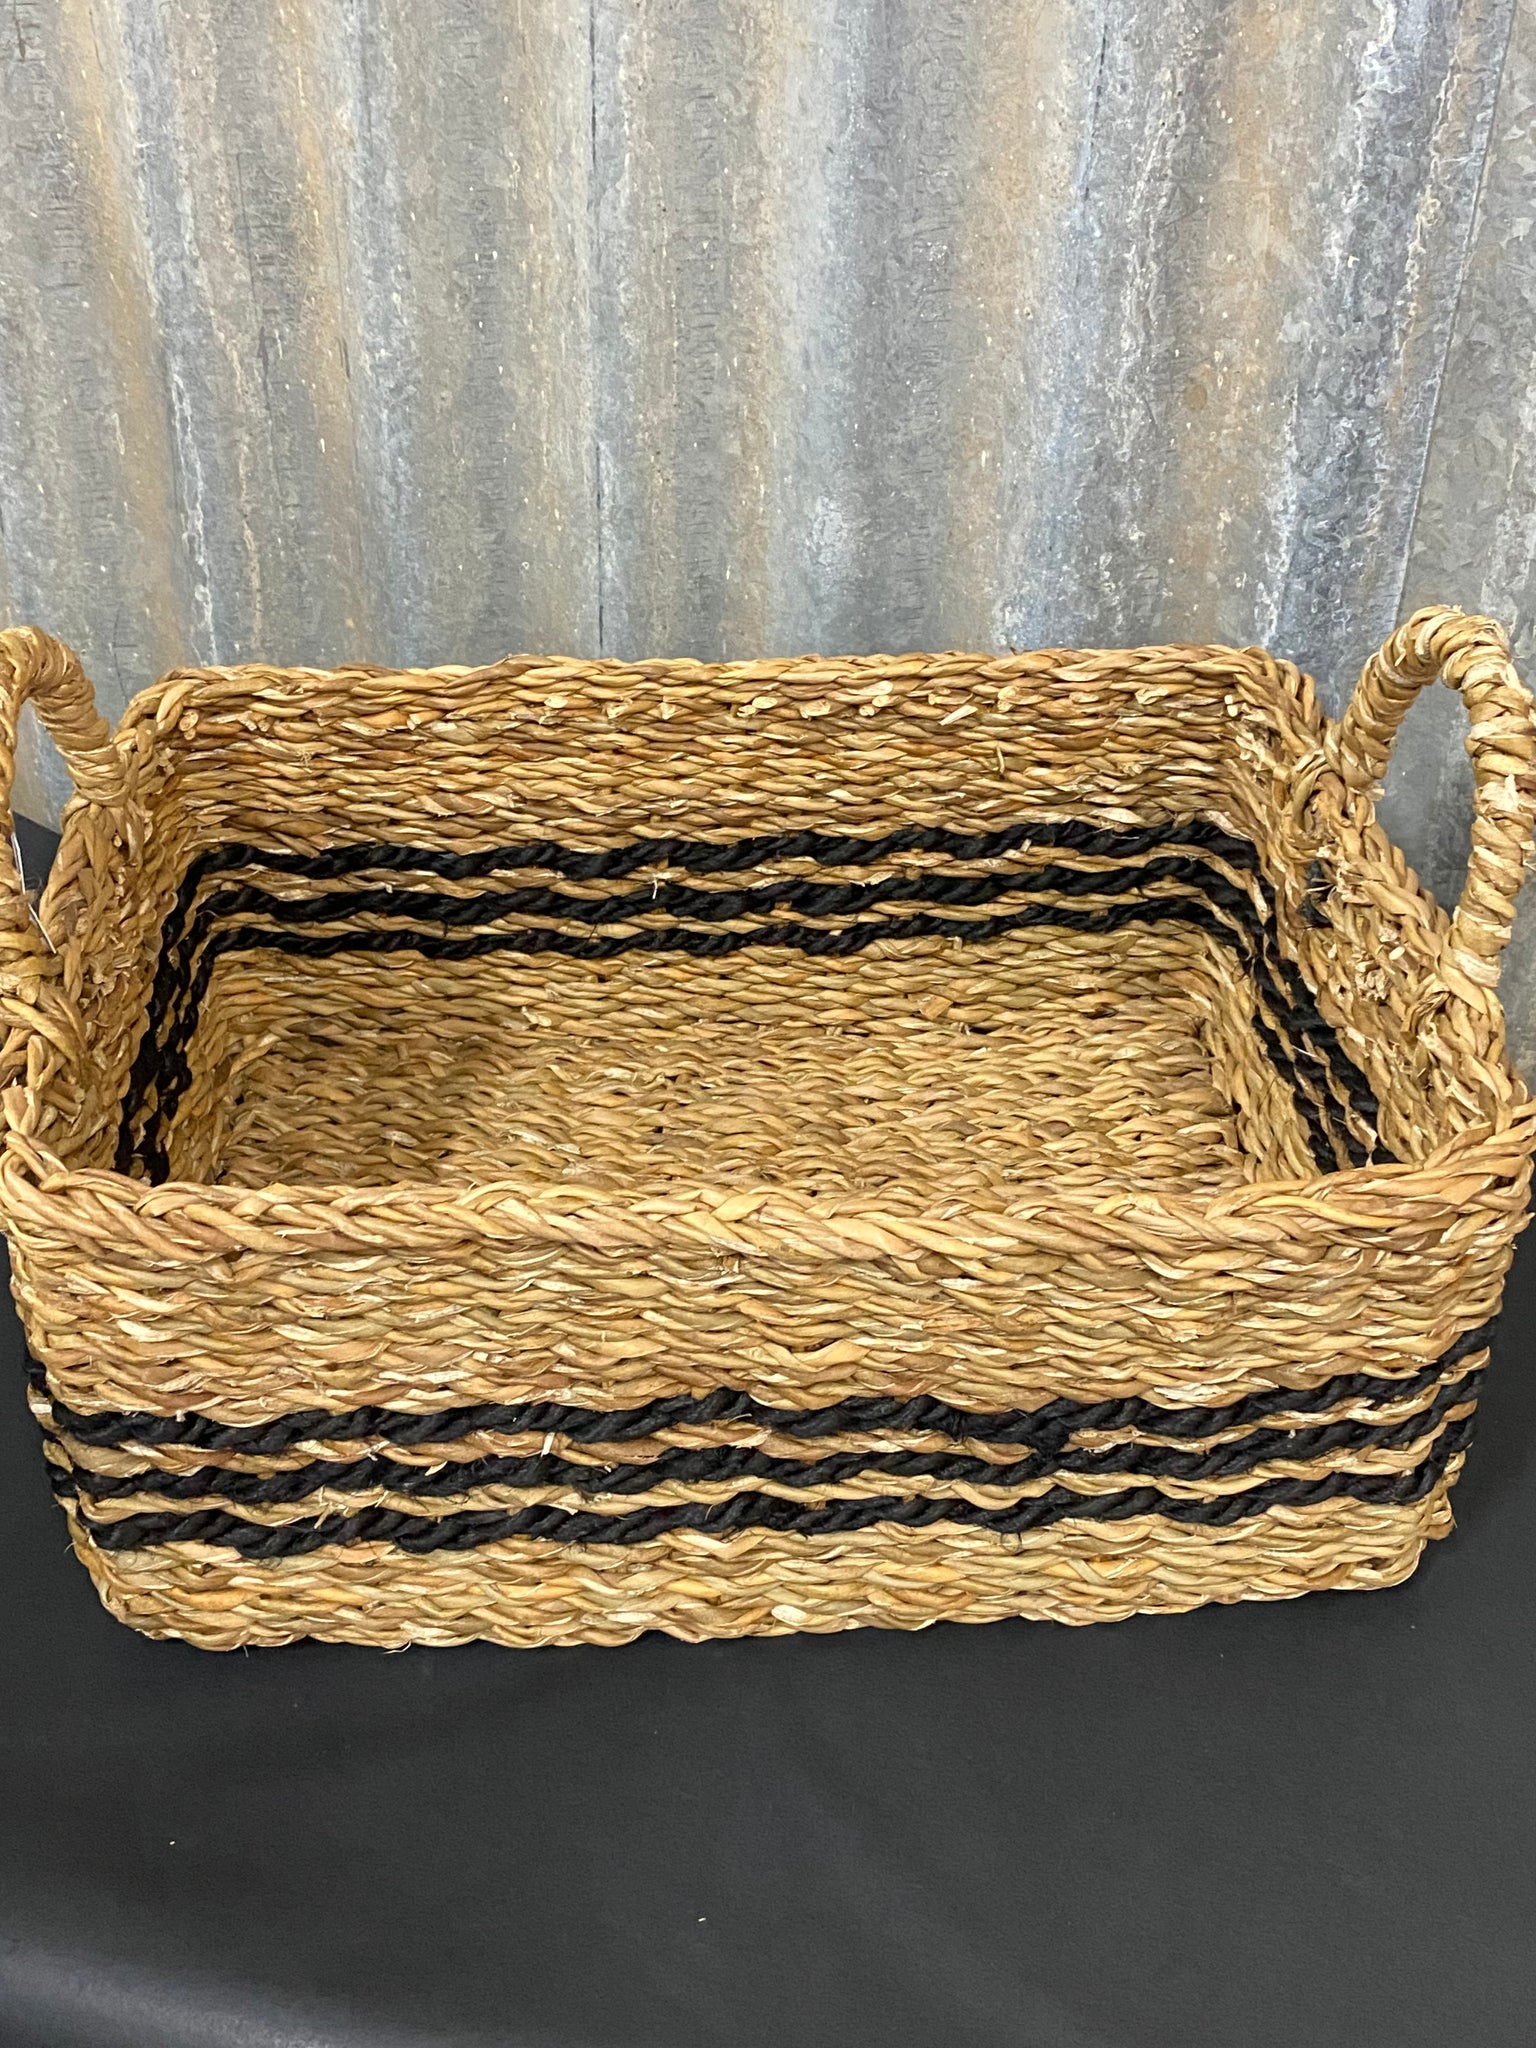 Palesh Woven Basket